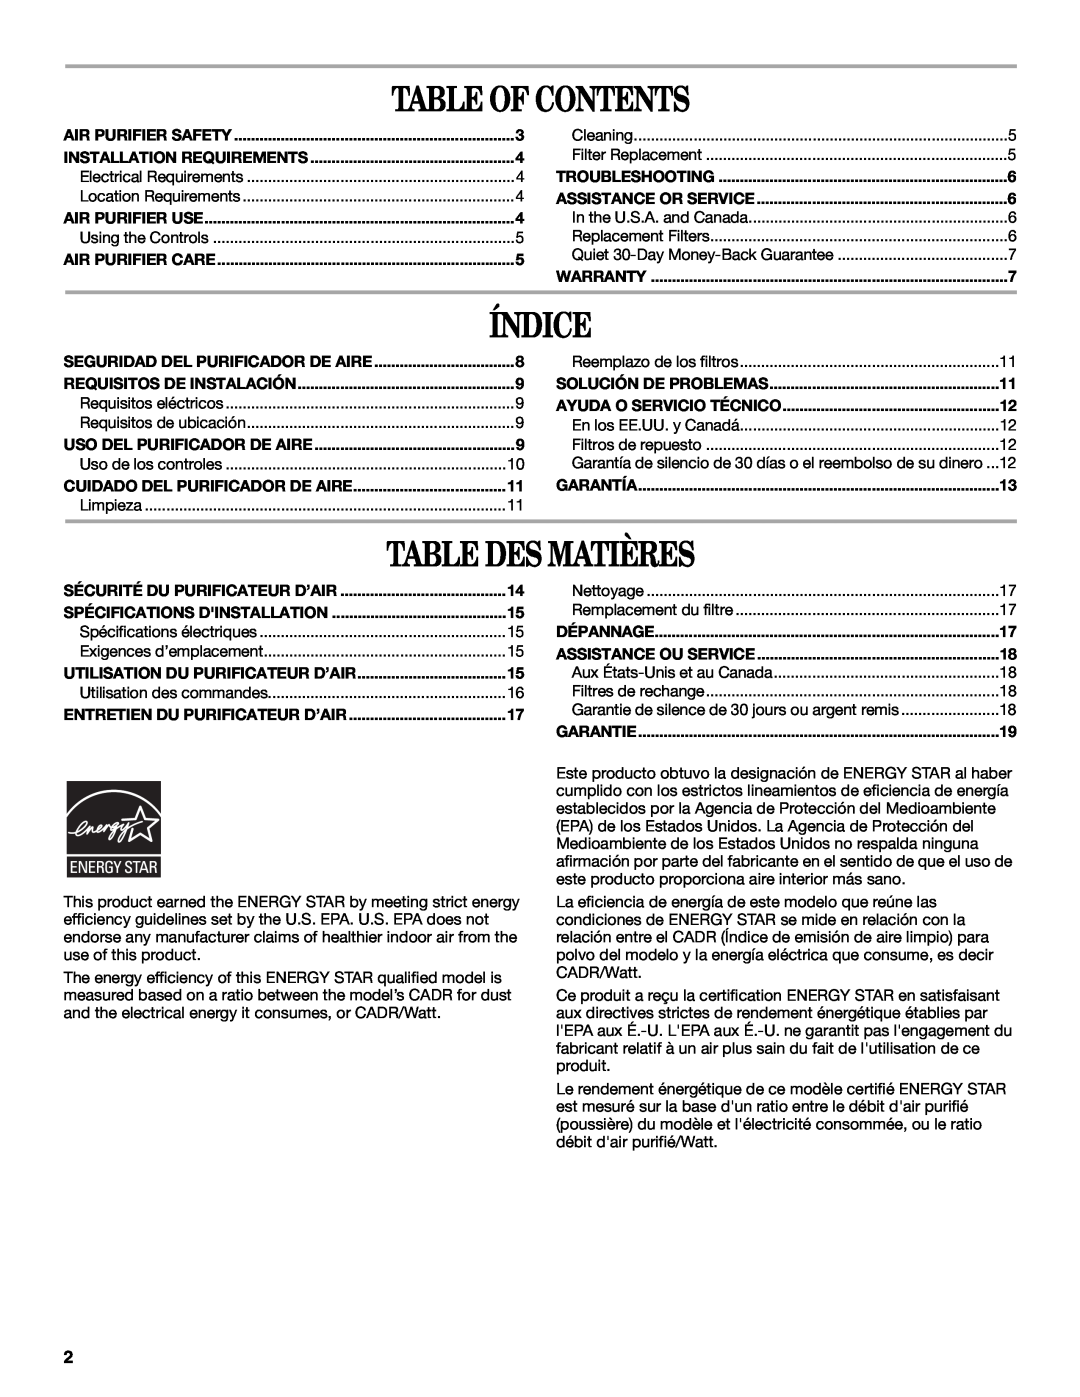 Whirlpool WP-AP510 manual Table Of Contents, Índice, Table Des Matières 